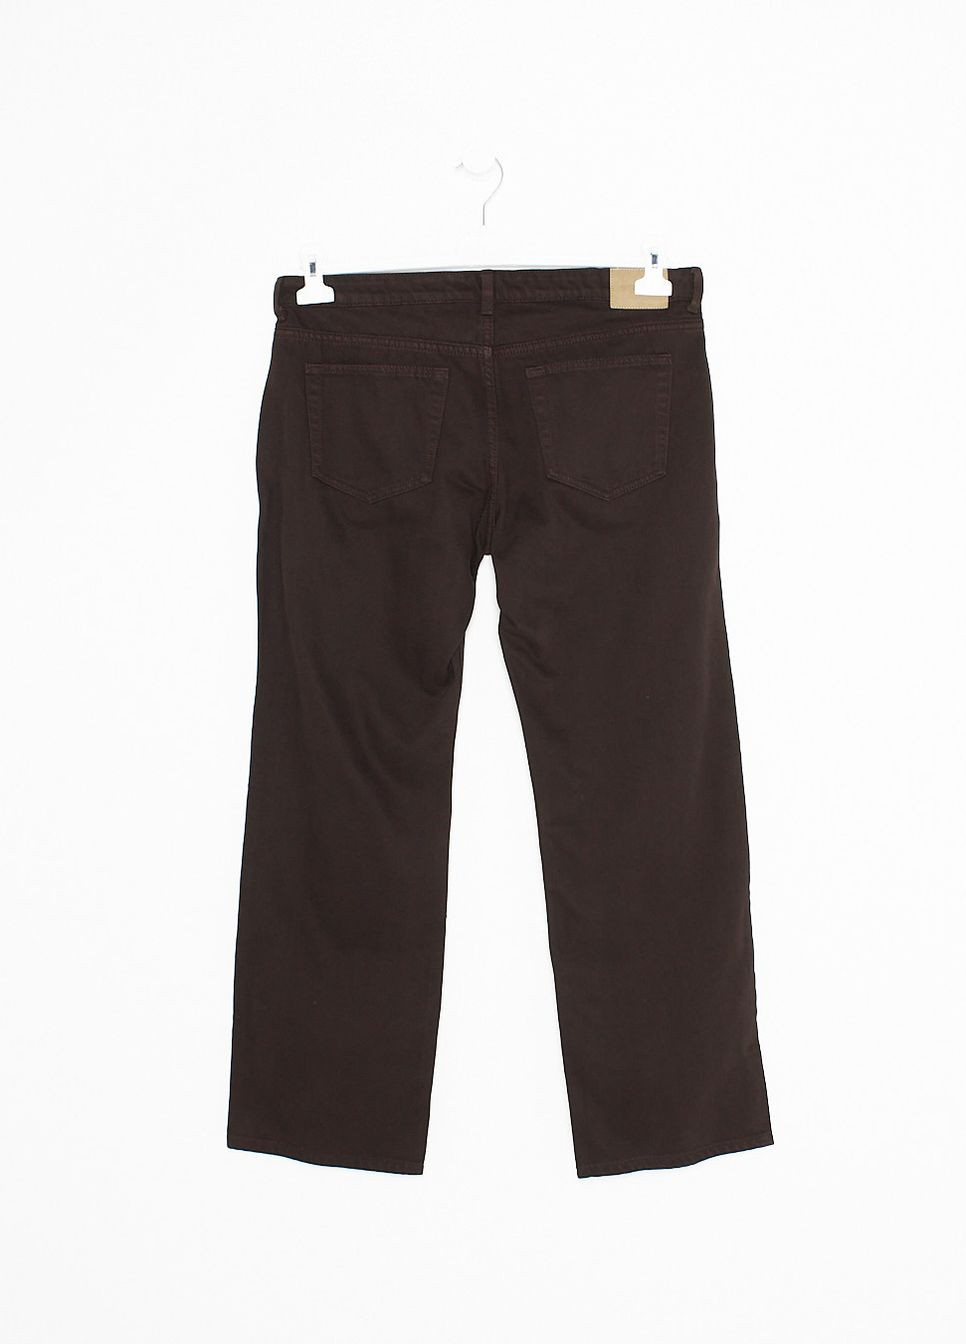 Темно-коричневые джинсы демисезон,темно-коричневый, Weekday